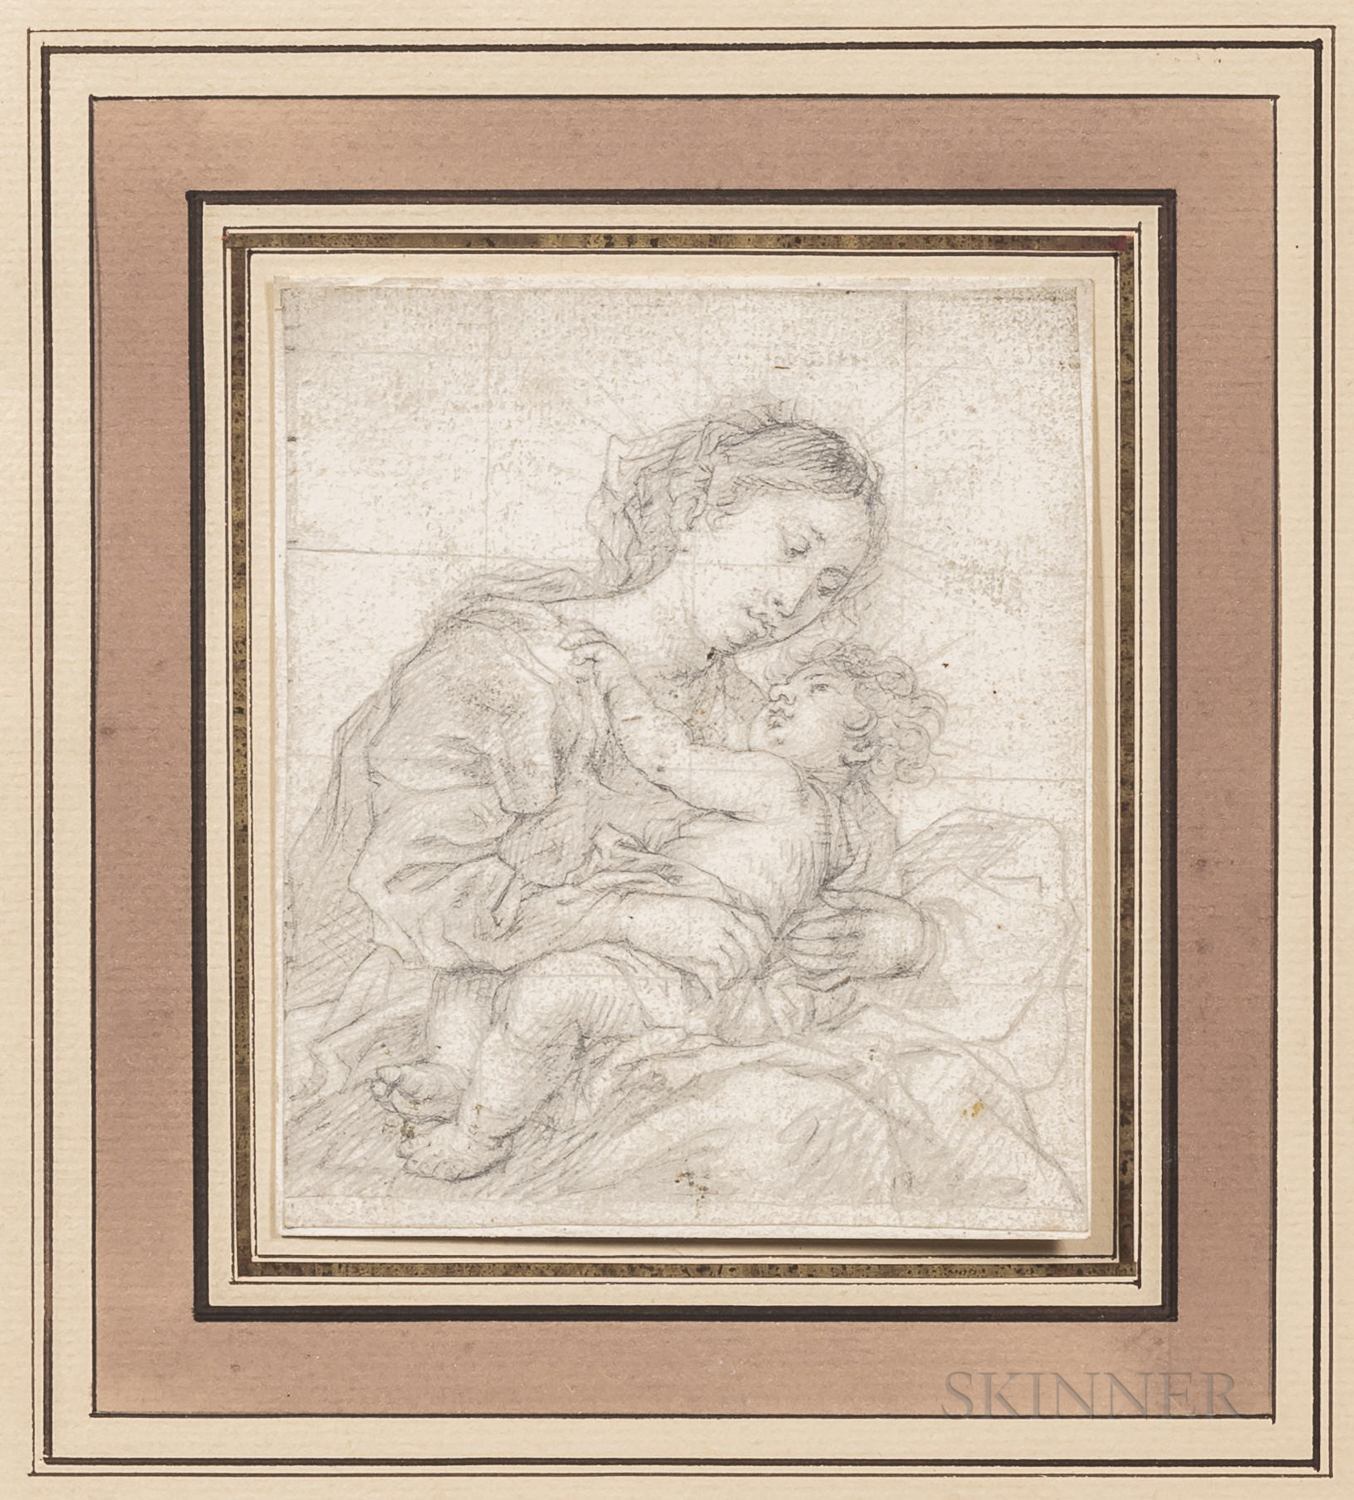 Flemish School, 17th Century, Madonna and Child, Half-length View, Unsigned, inscribed "H. van Balen